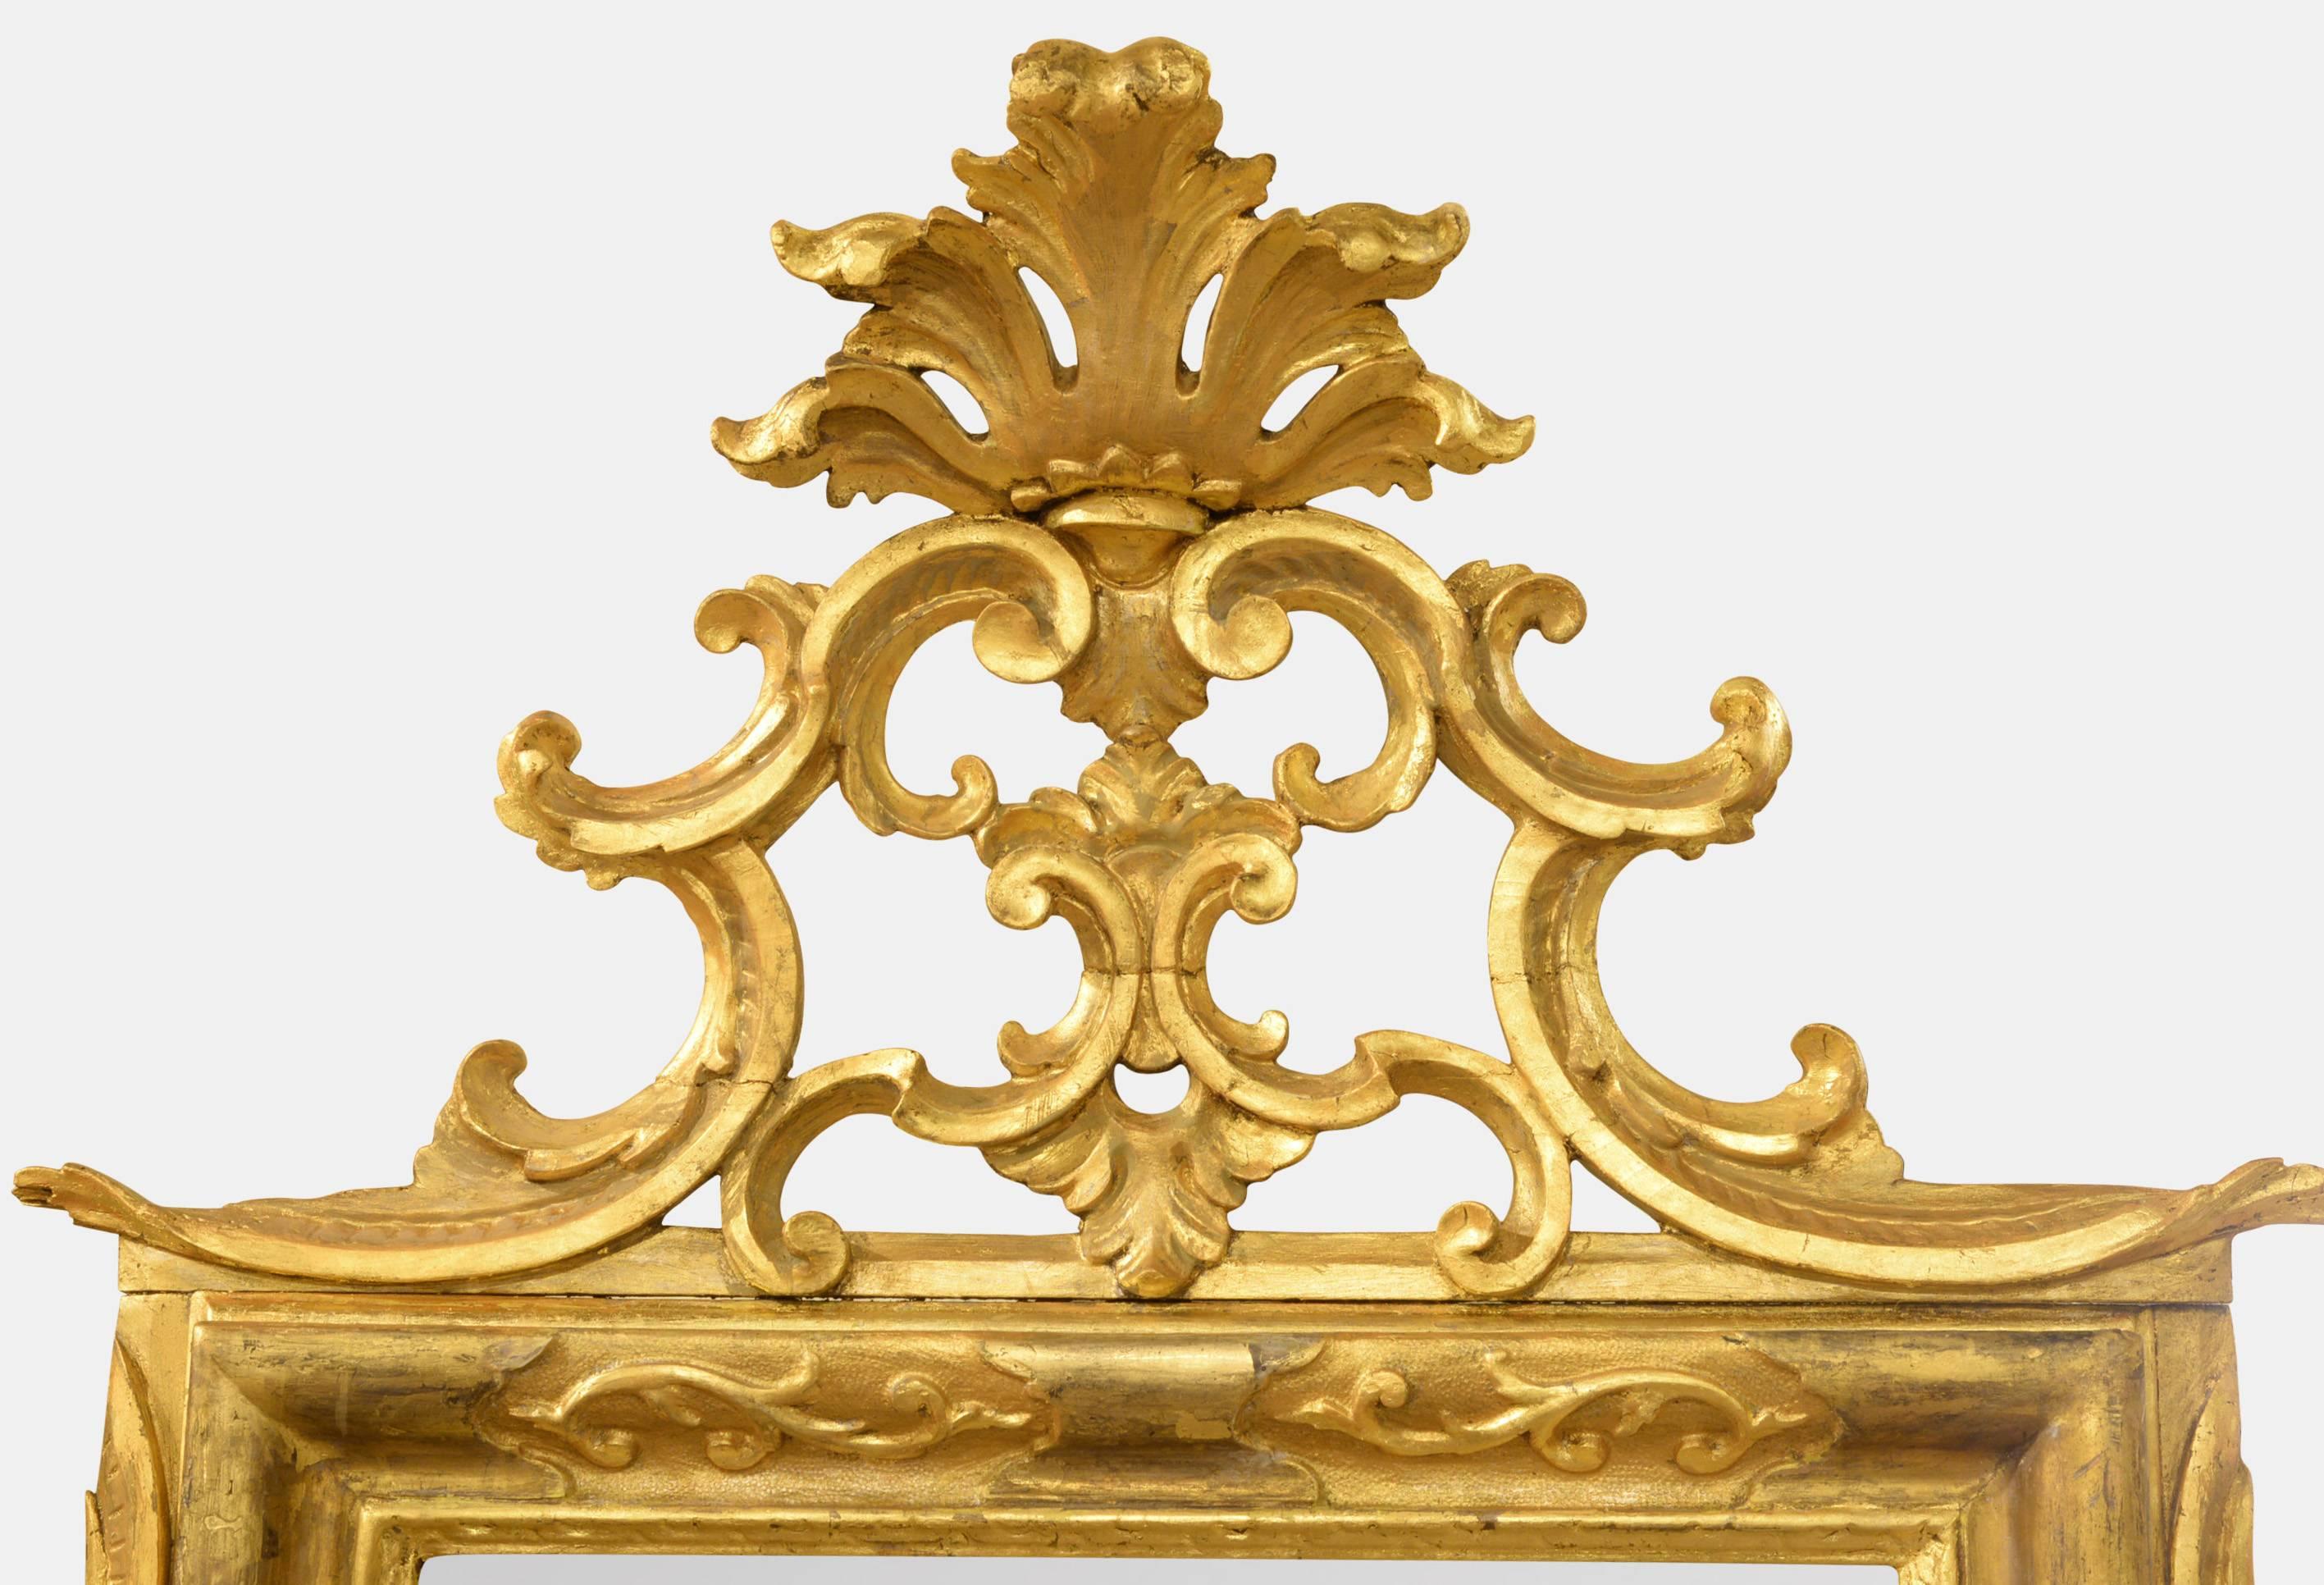 An Italian gilded rectangular mirror with decorative cresting,

circa 1800.